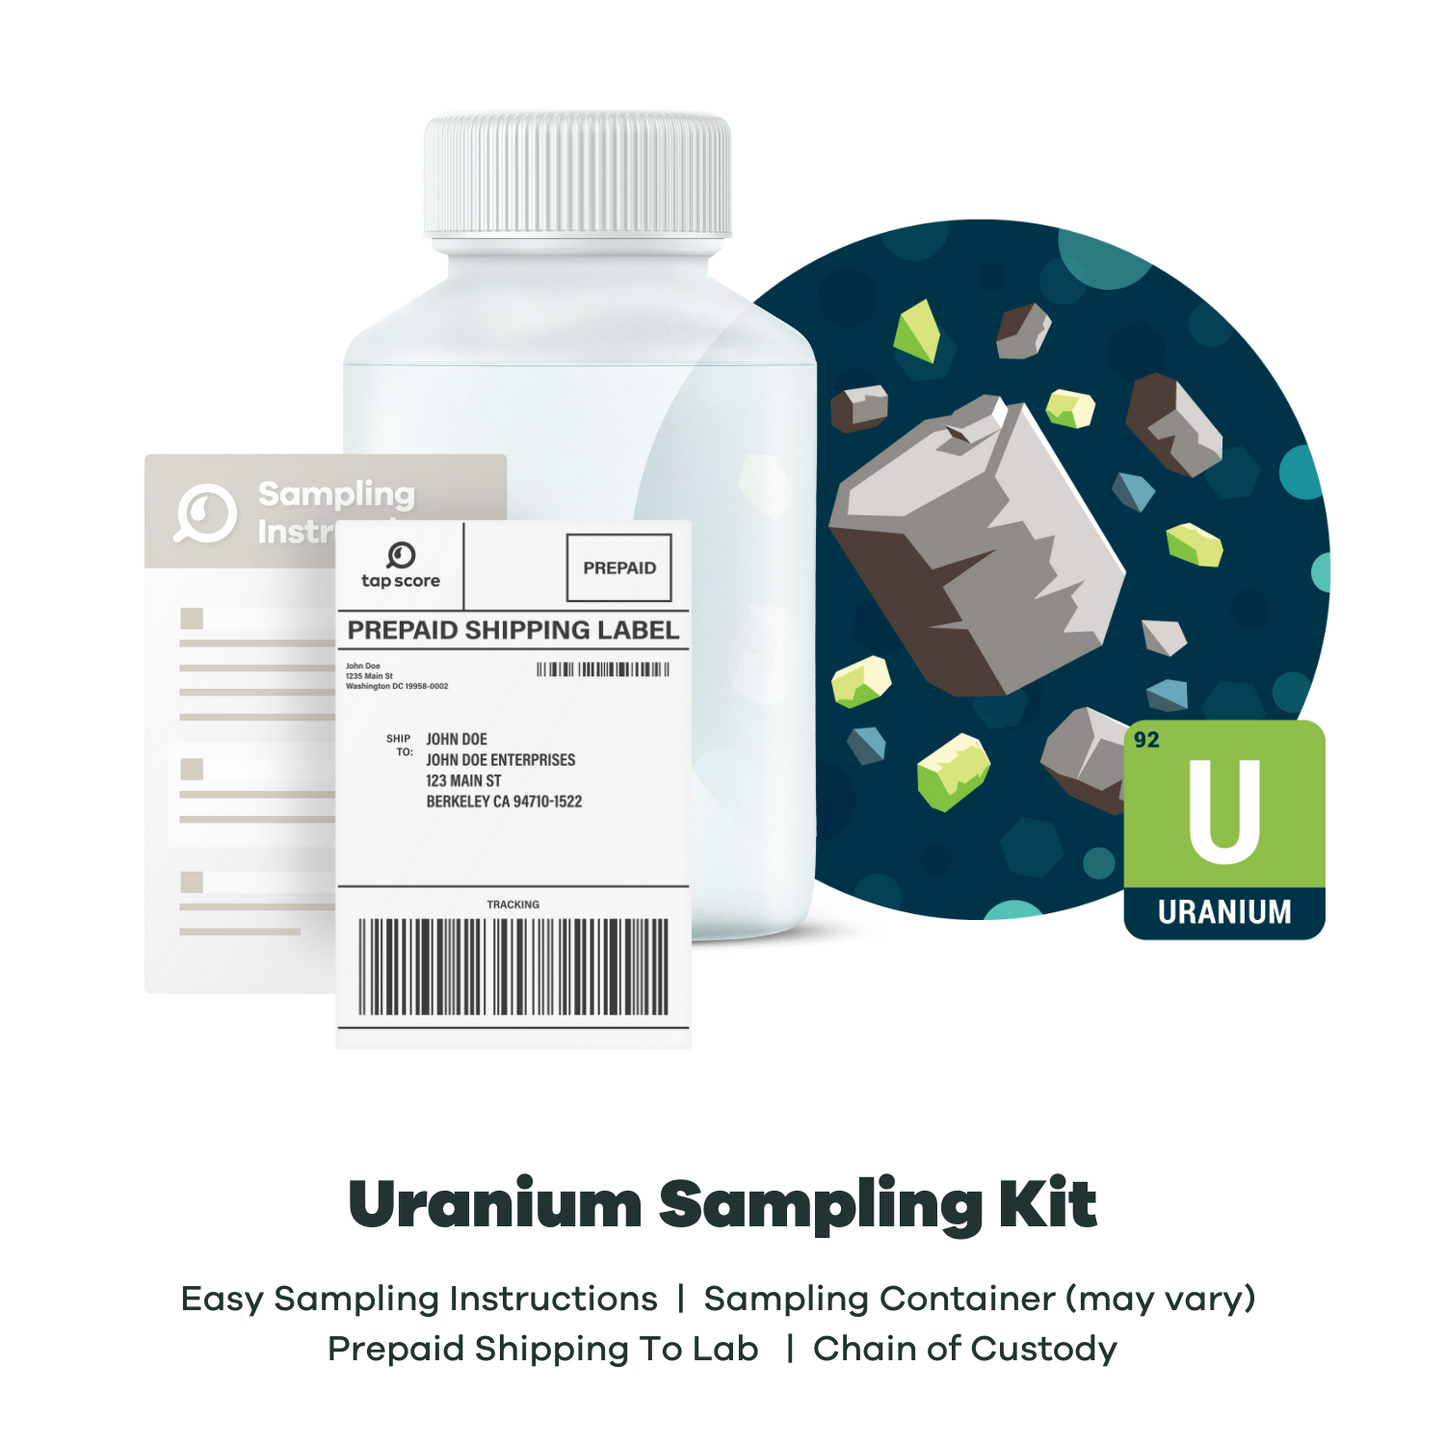 Uranium Sampling Kit Contents for Lab Water Test